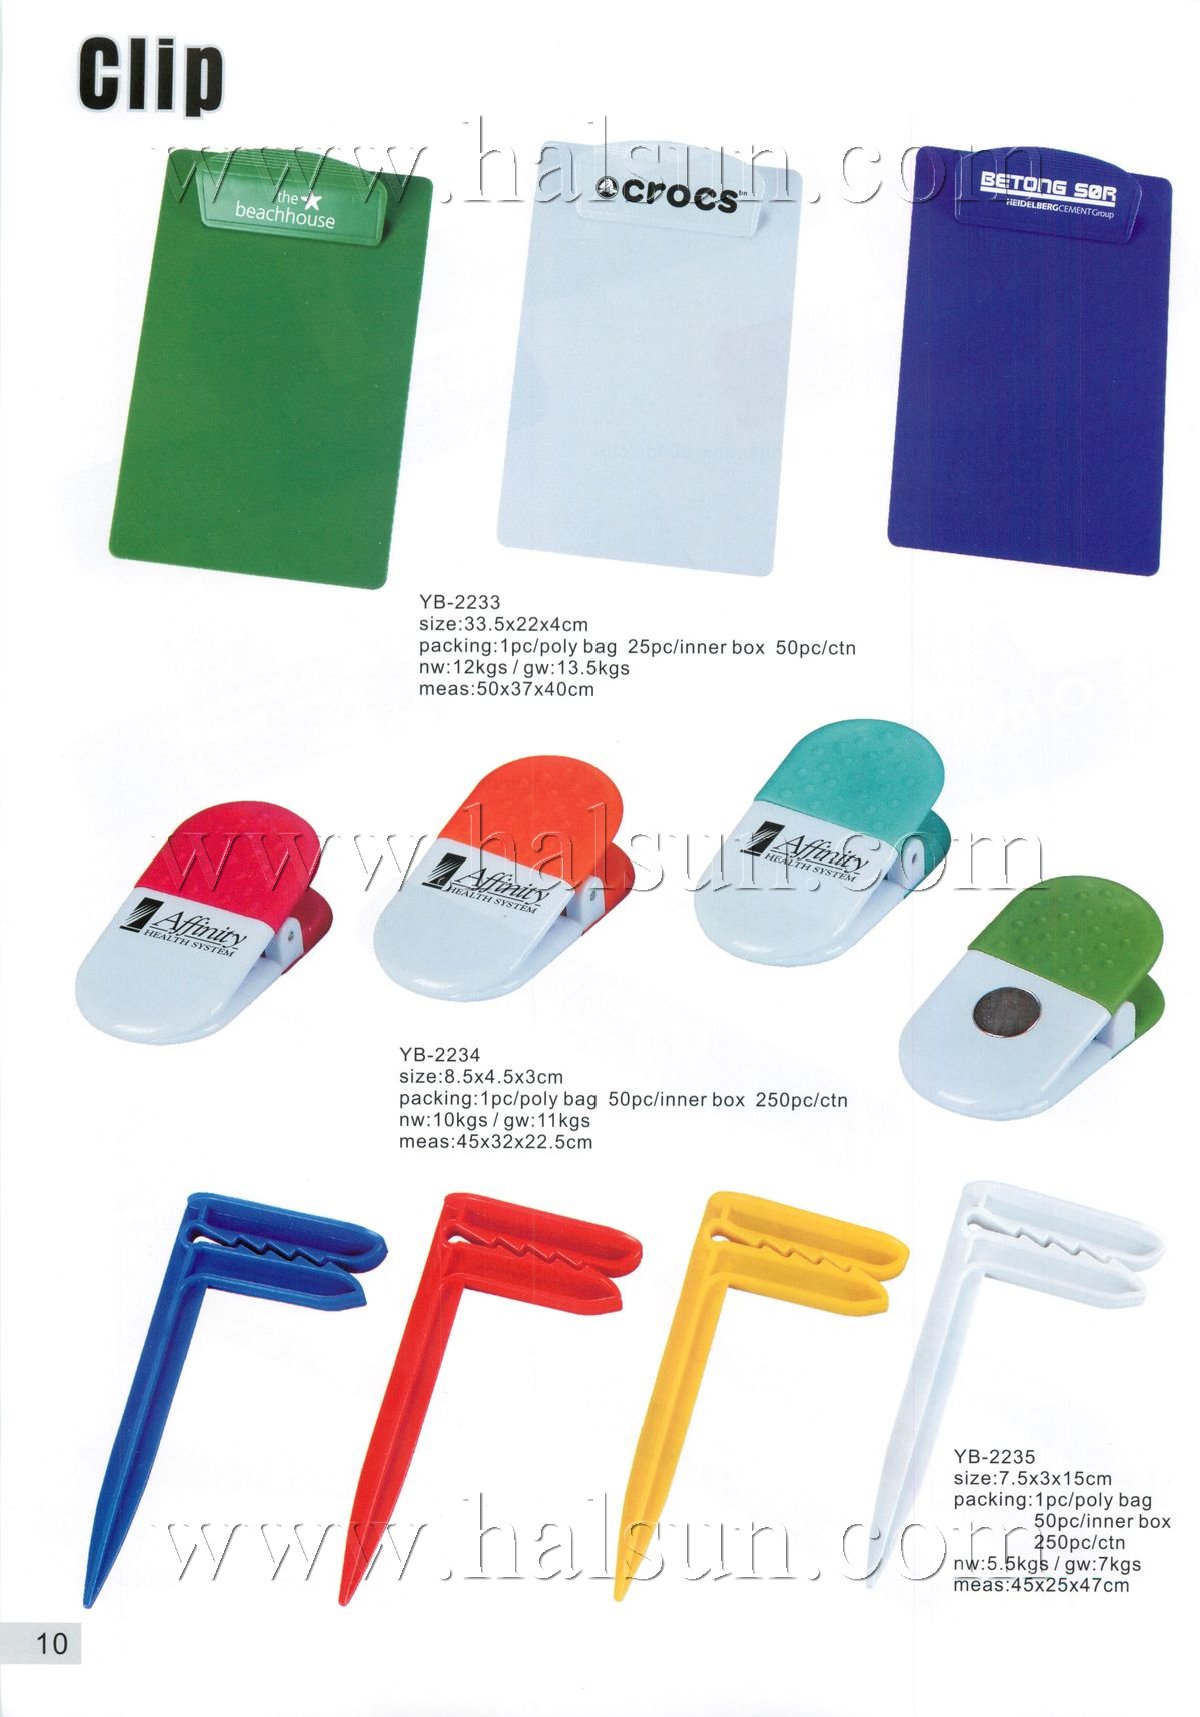 Promotional lastic A4 Paper Holder Clipboard Clip,YB-2233,YB-2234,YB-2235